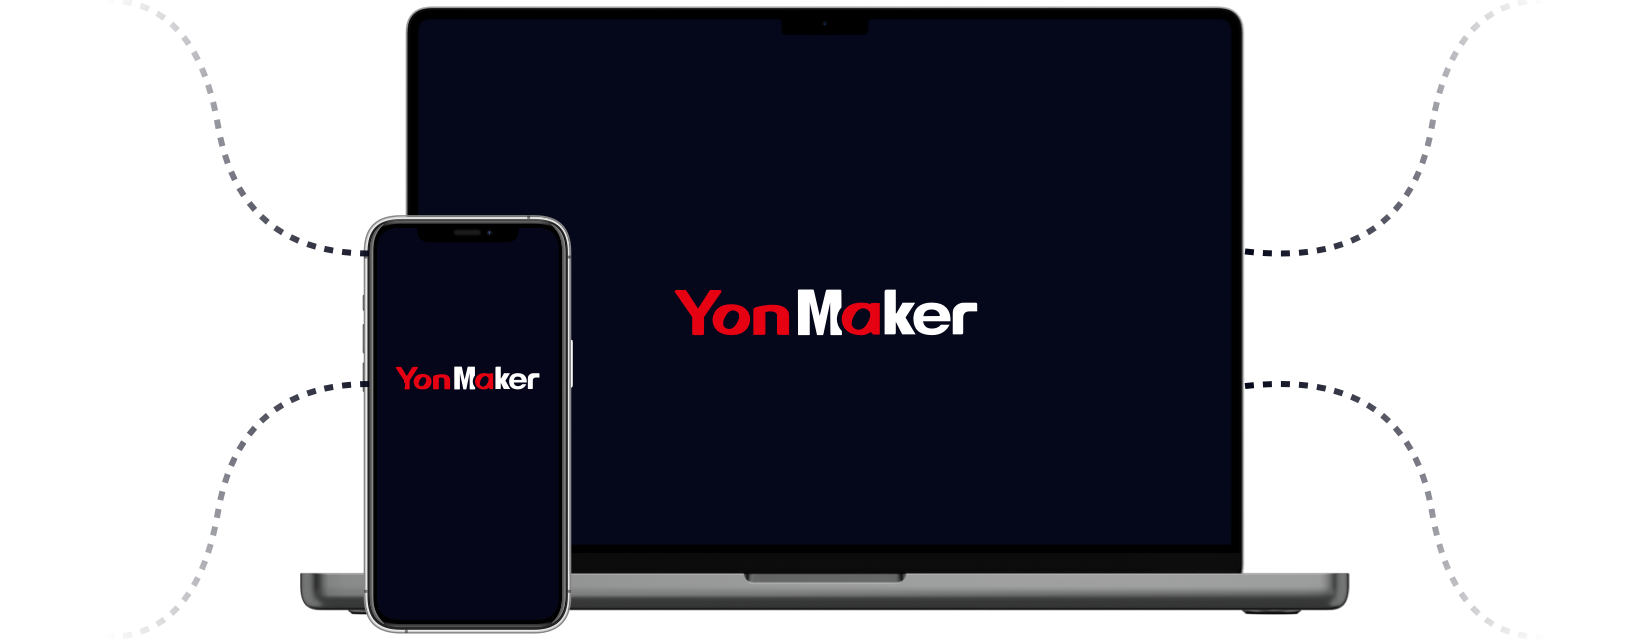 YonMaker生态定制平台